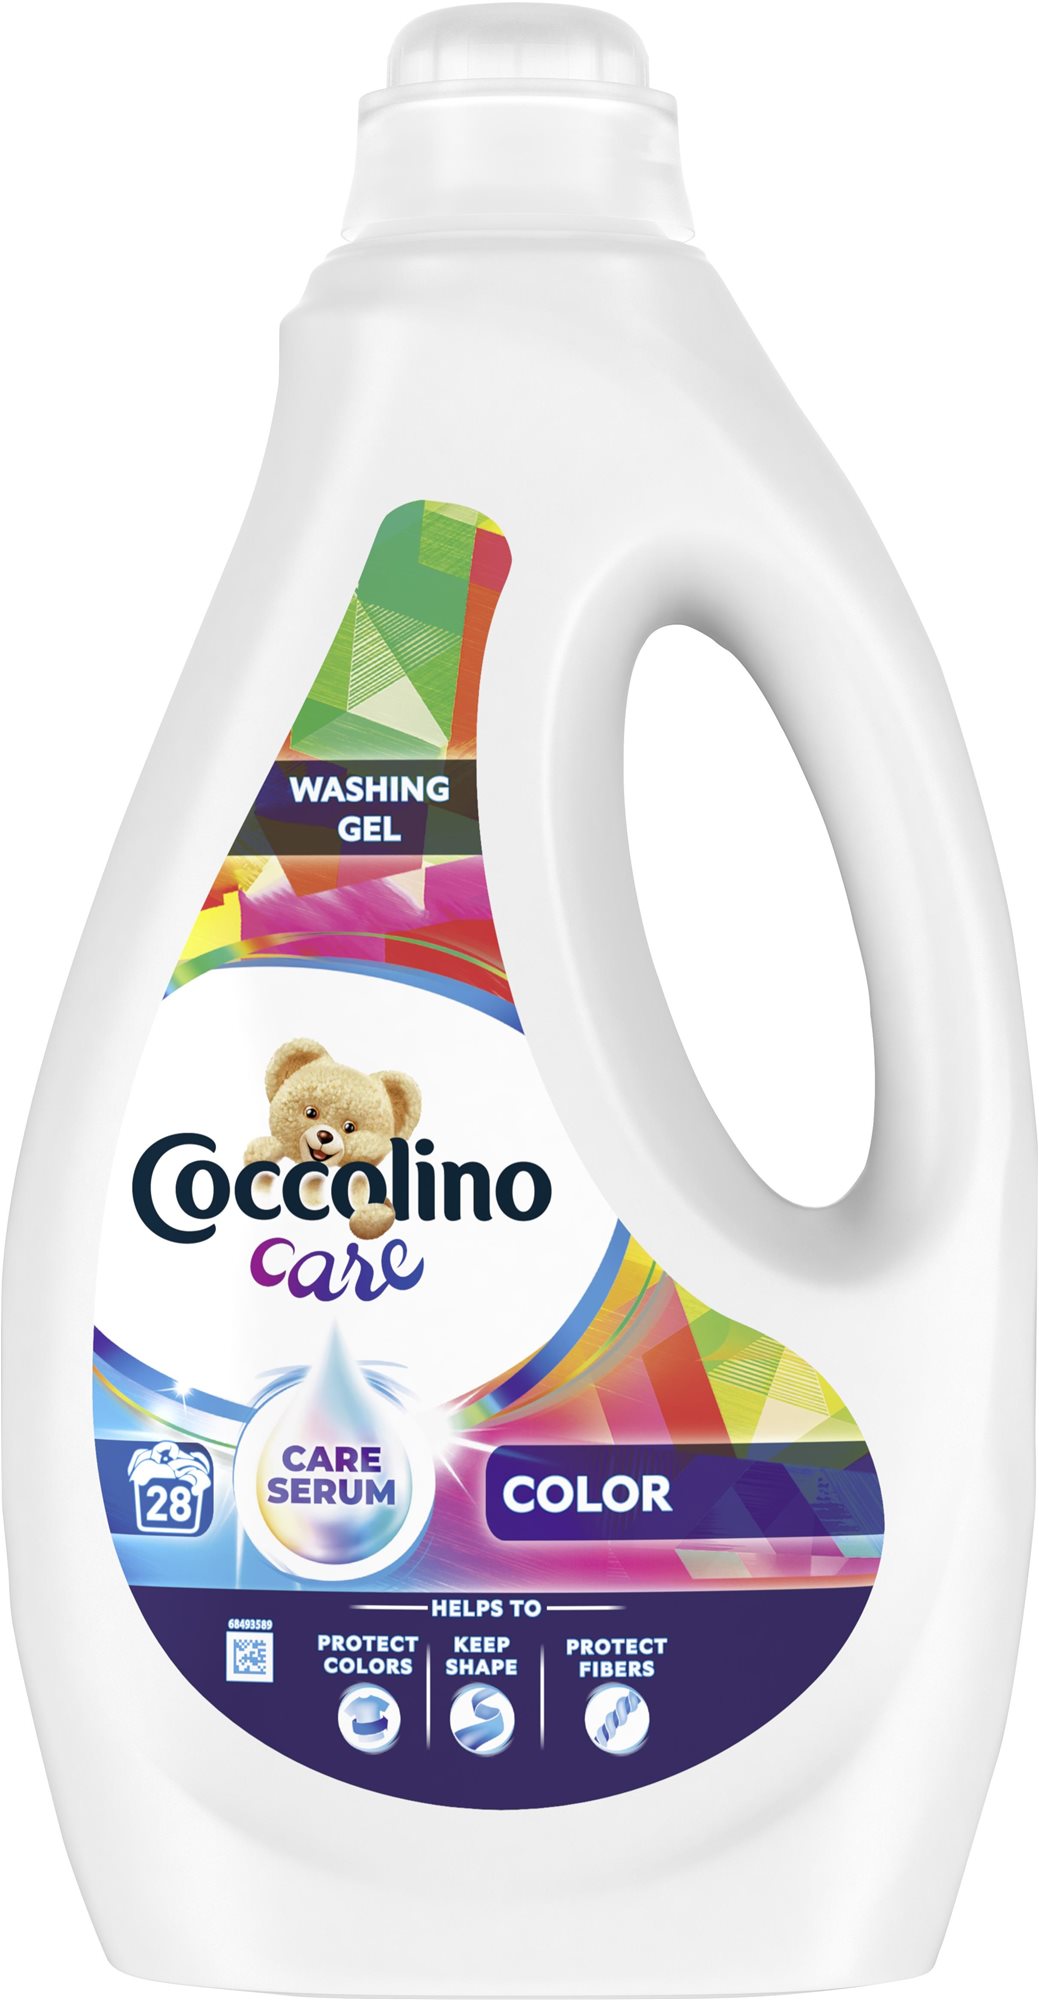 COCCOLINO Care gél színes ruhákhoz1,12 l (28 mosás)